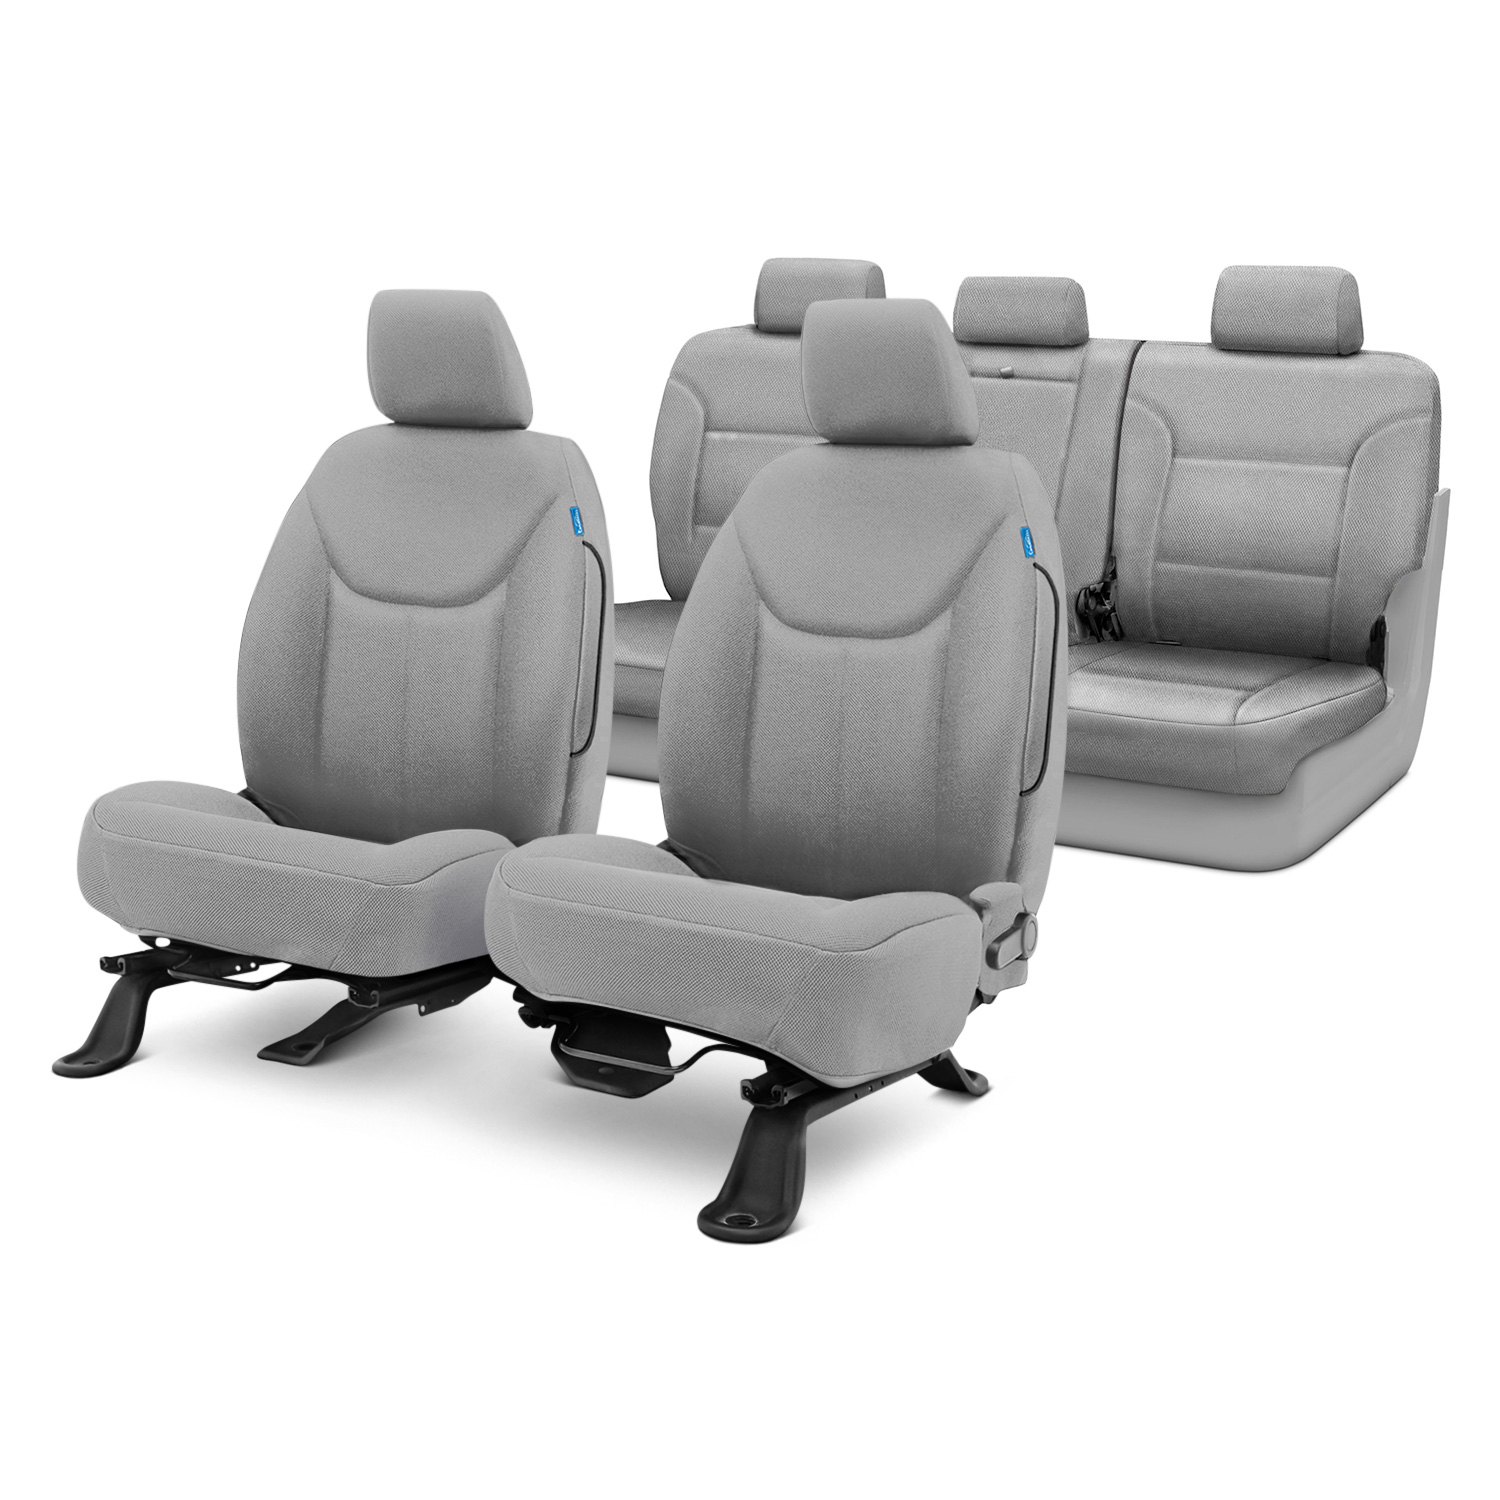 Custom seat covers gmc sierra #1